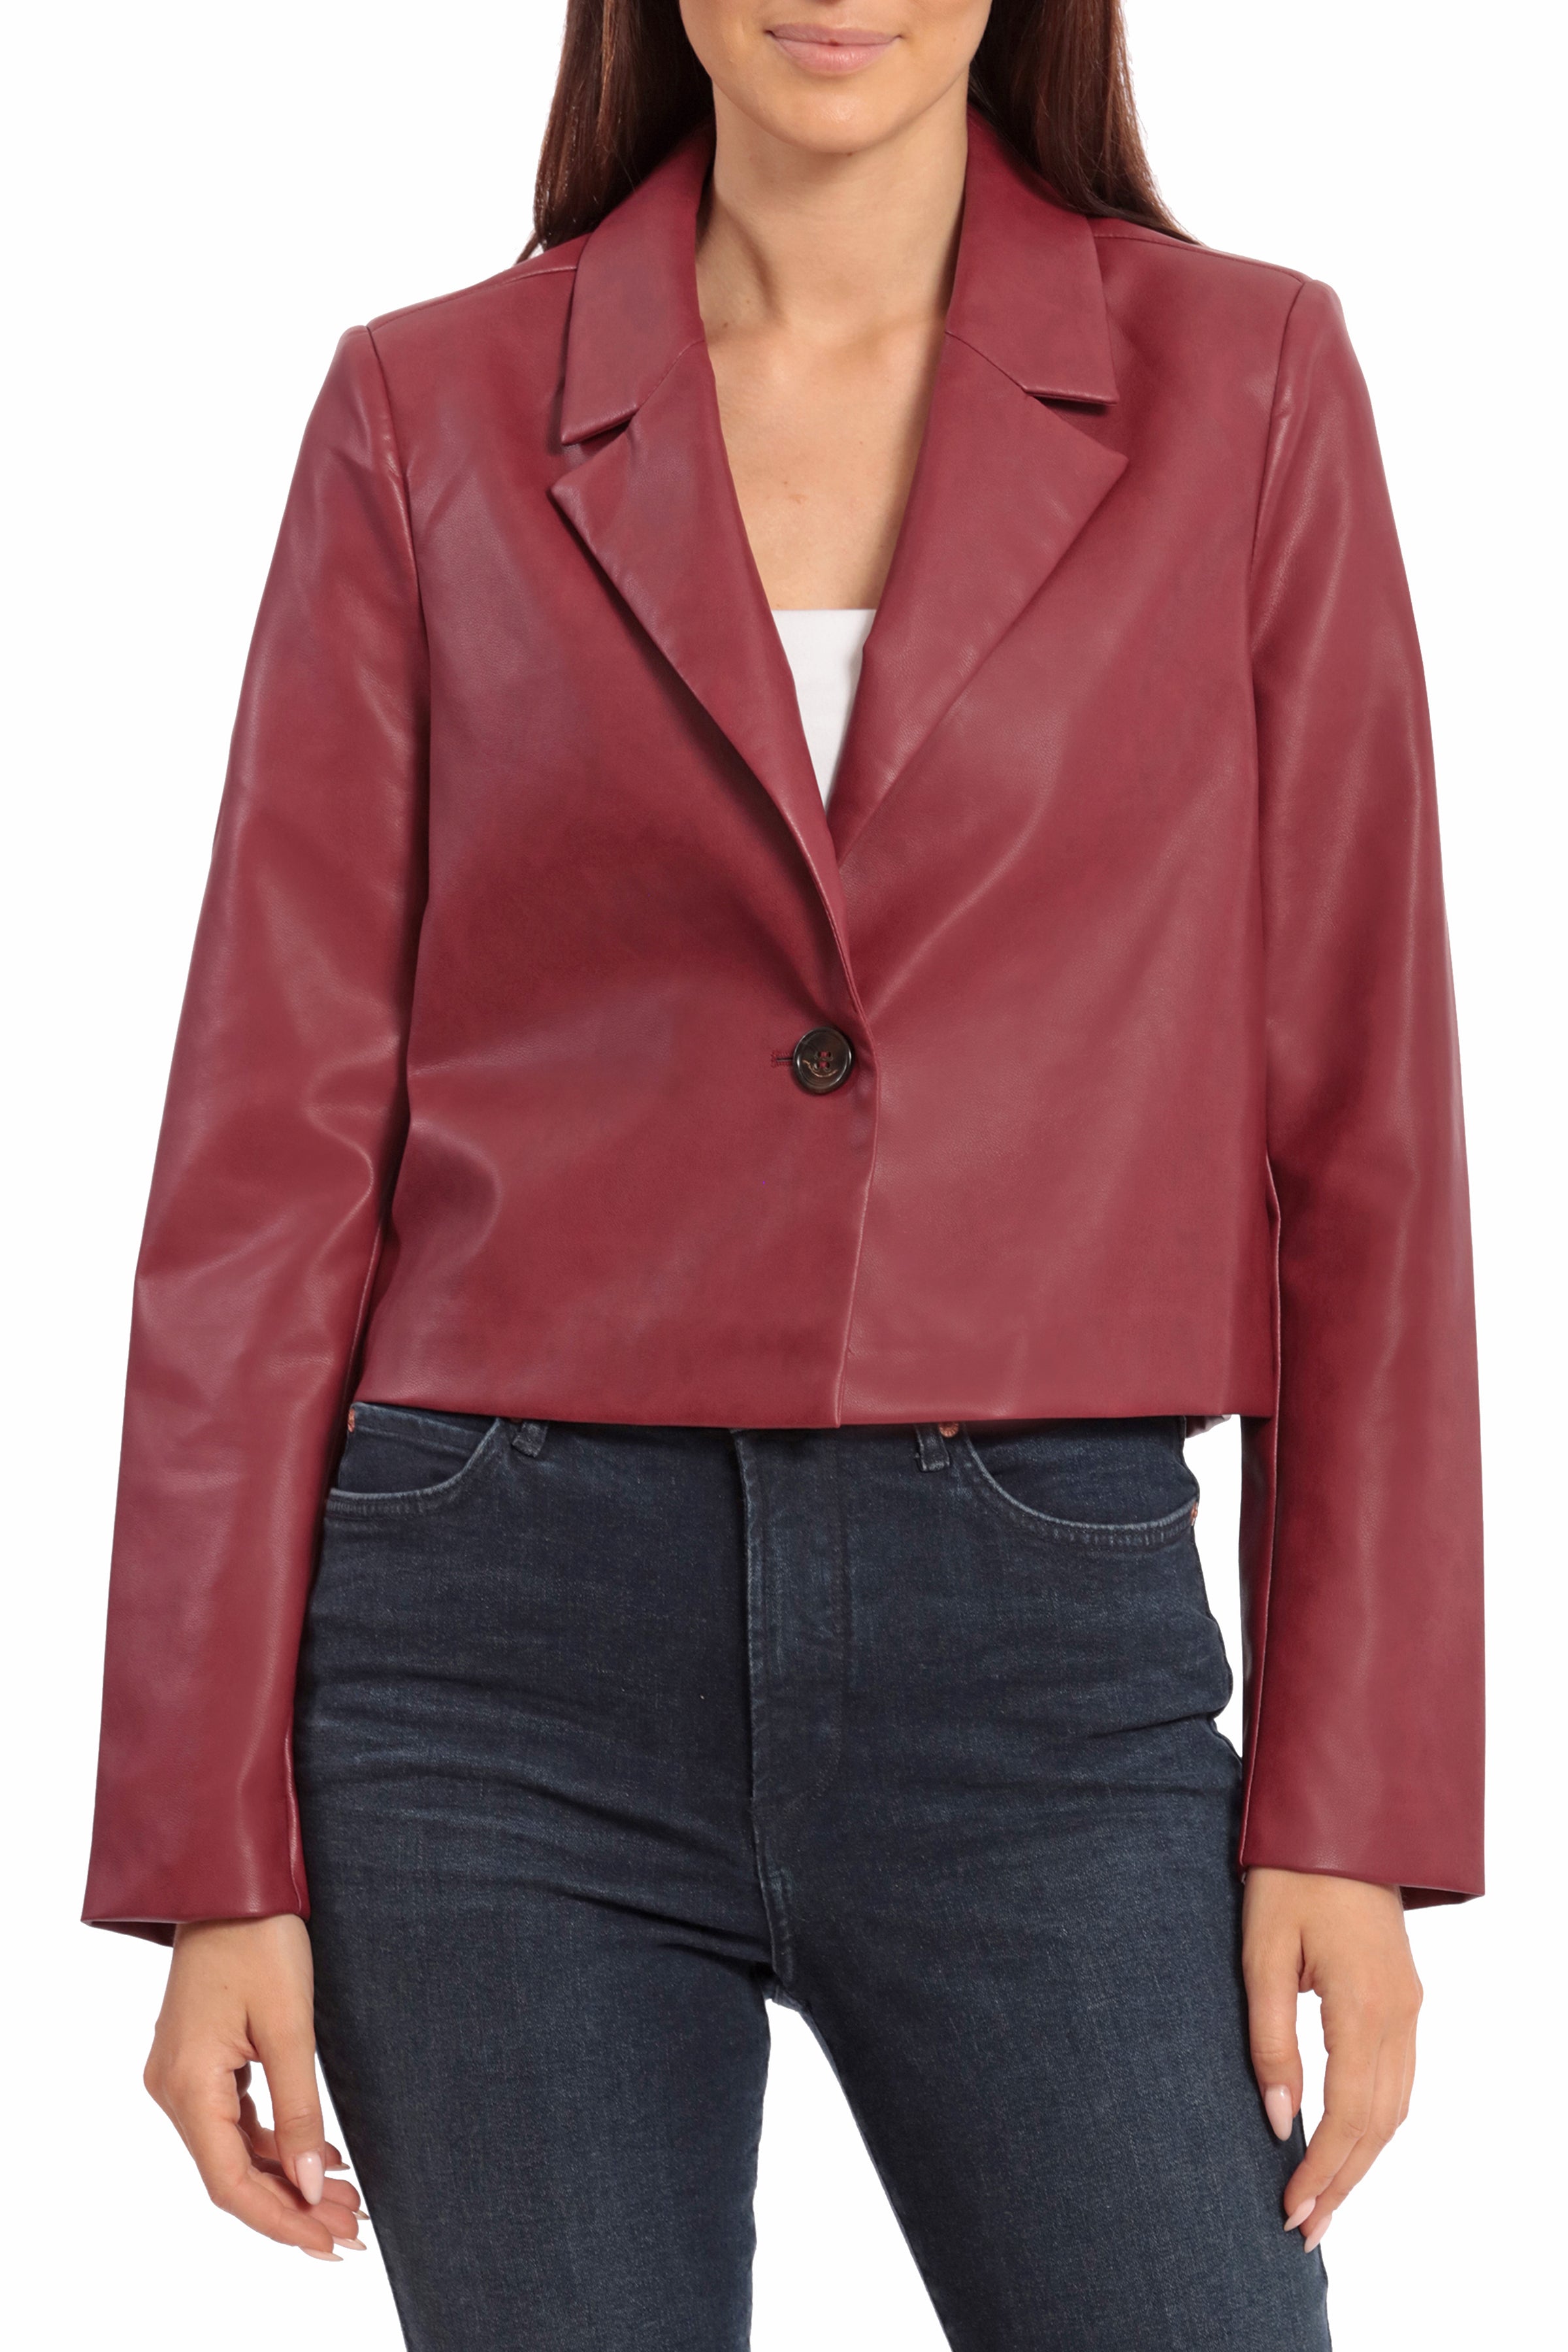 Boxy Vegan Leather Blazer Women's Fashion Jacket Currant Red